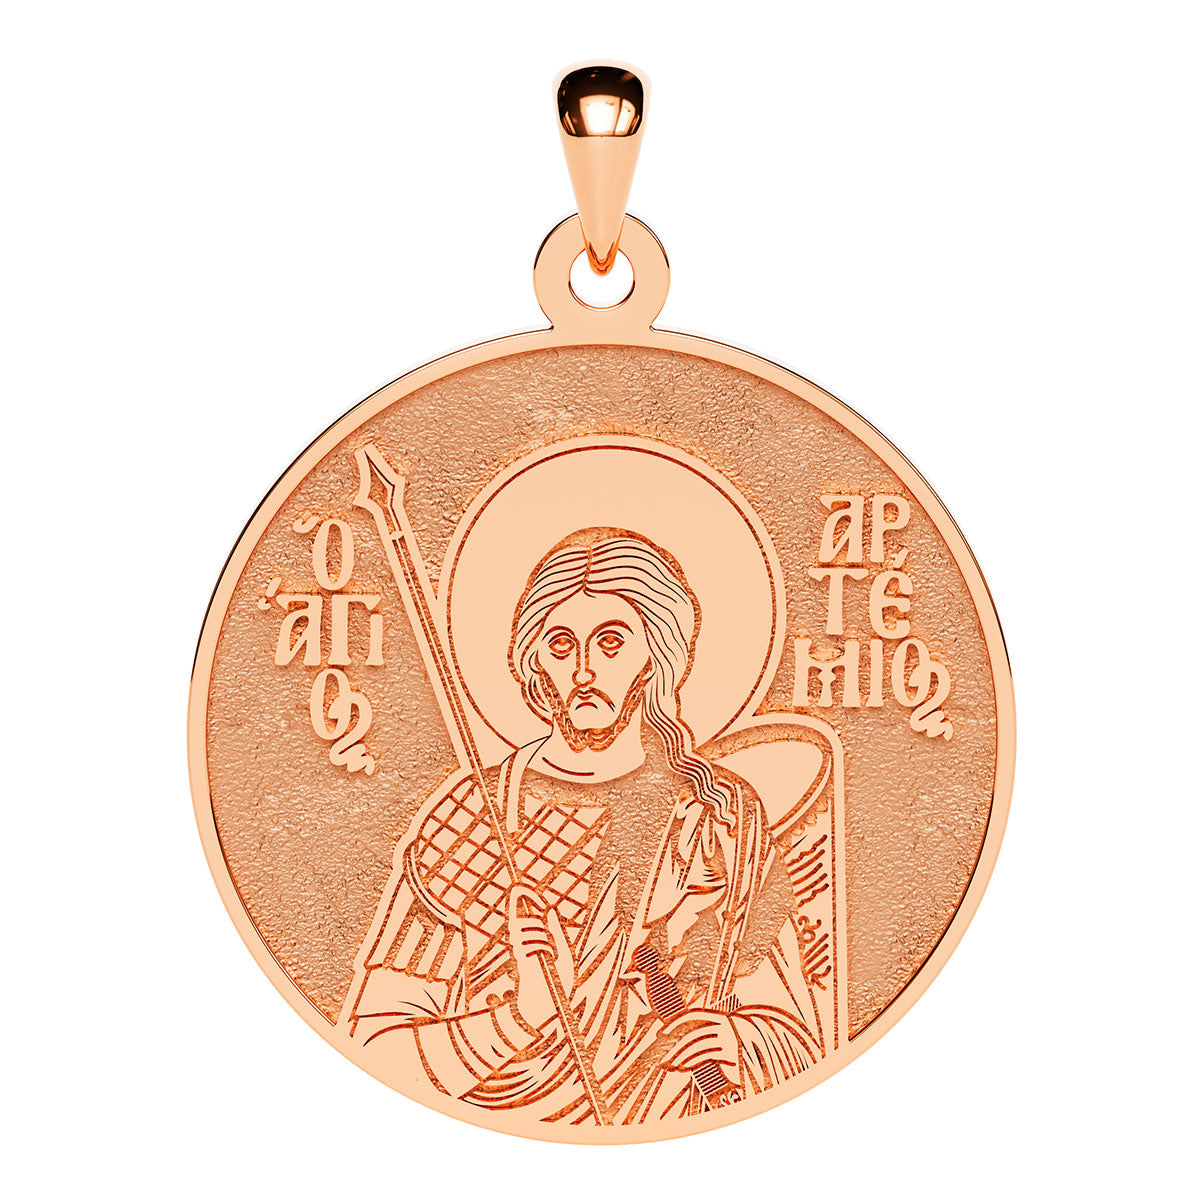 Saint Artemios (Artemius) of Antioch Greek Orthodox Icon Round Medal